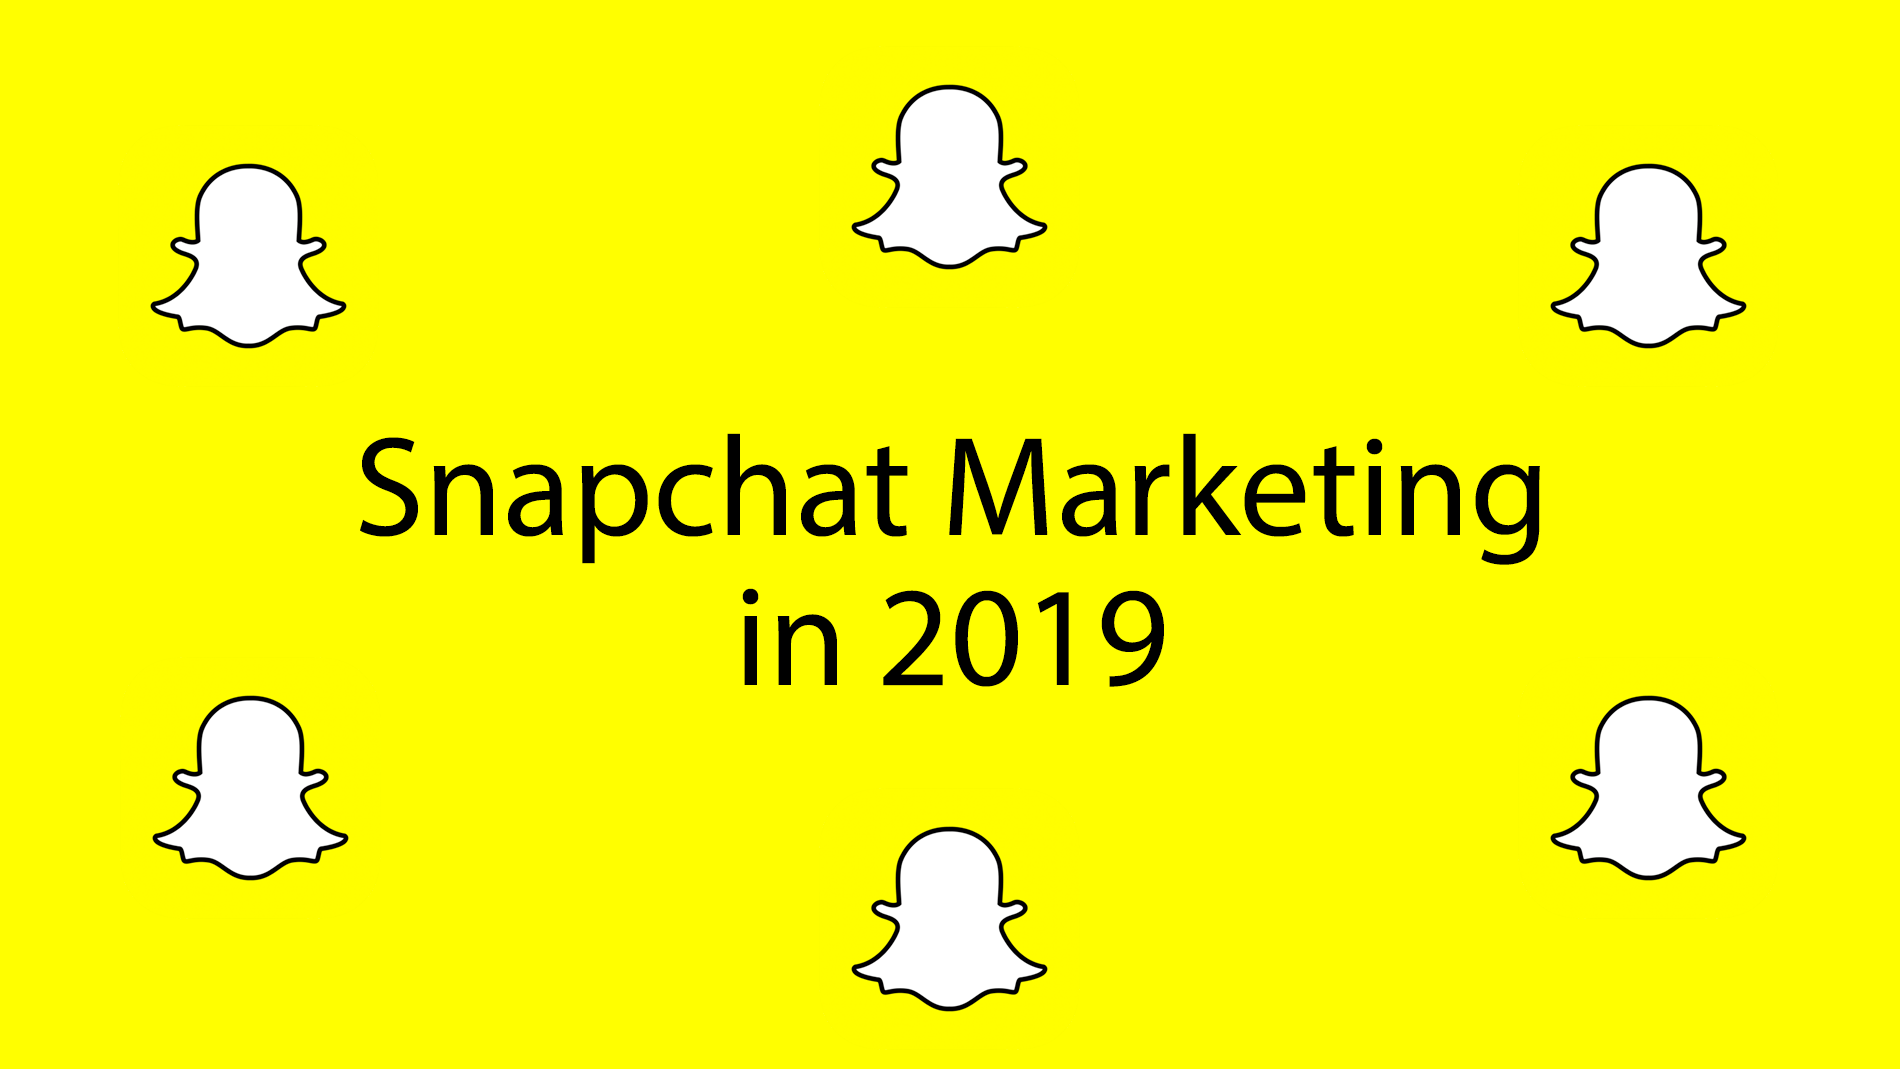 blogssnapchat-marketing-in-2019-overzichtsvisual-12132-637248862290000000